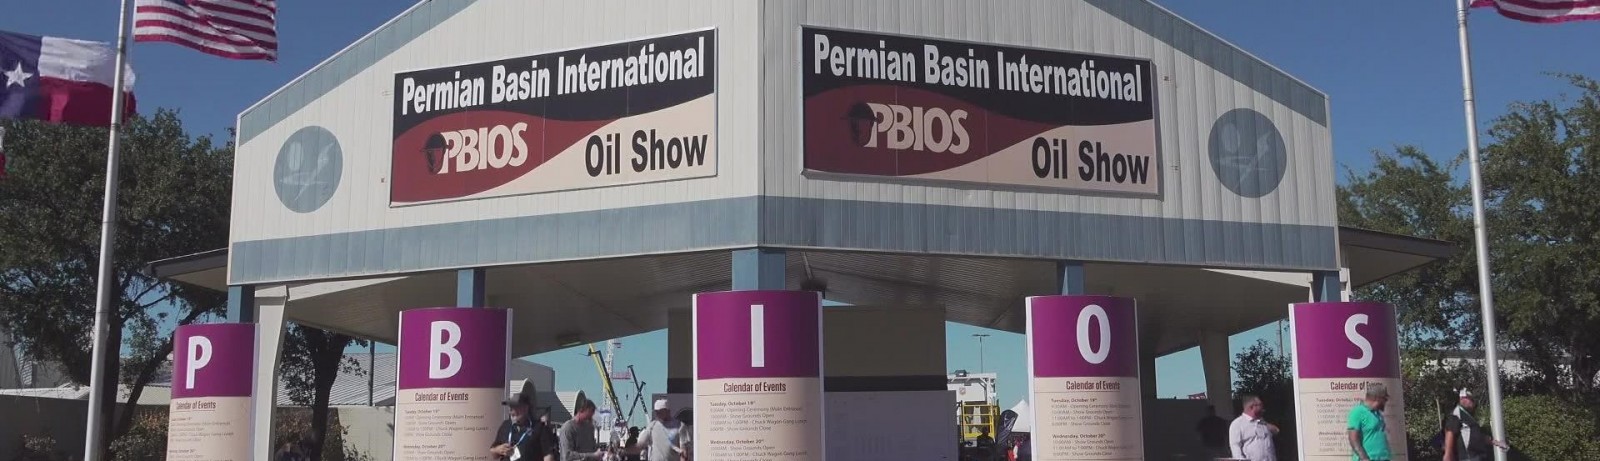 International Oil Show in Texas, USA